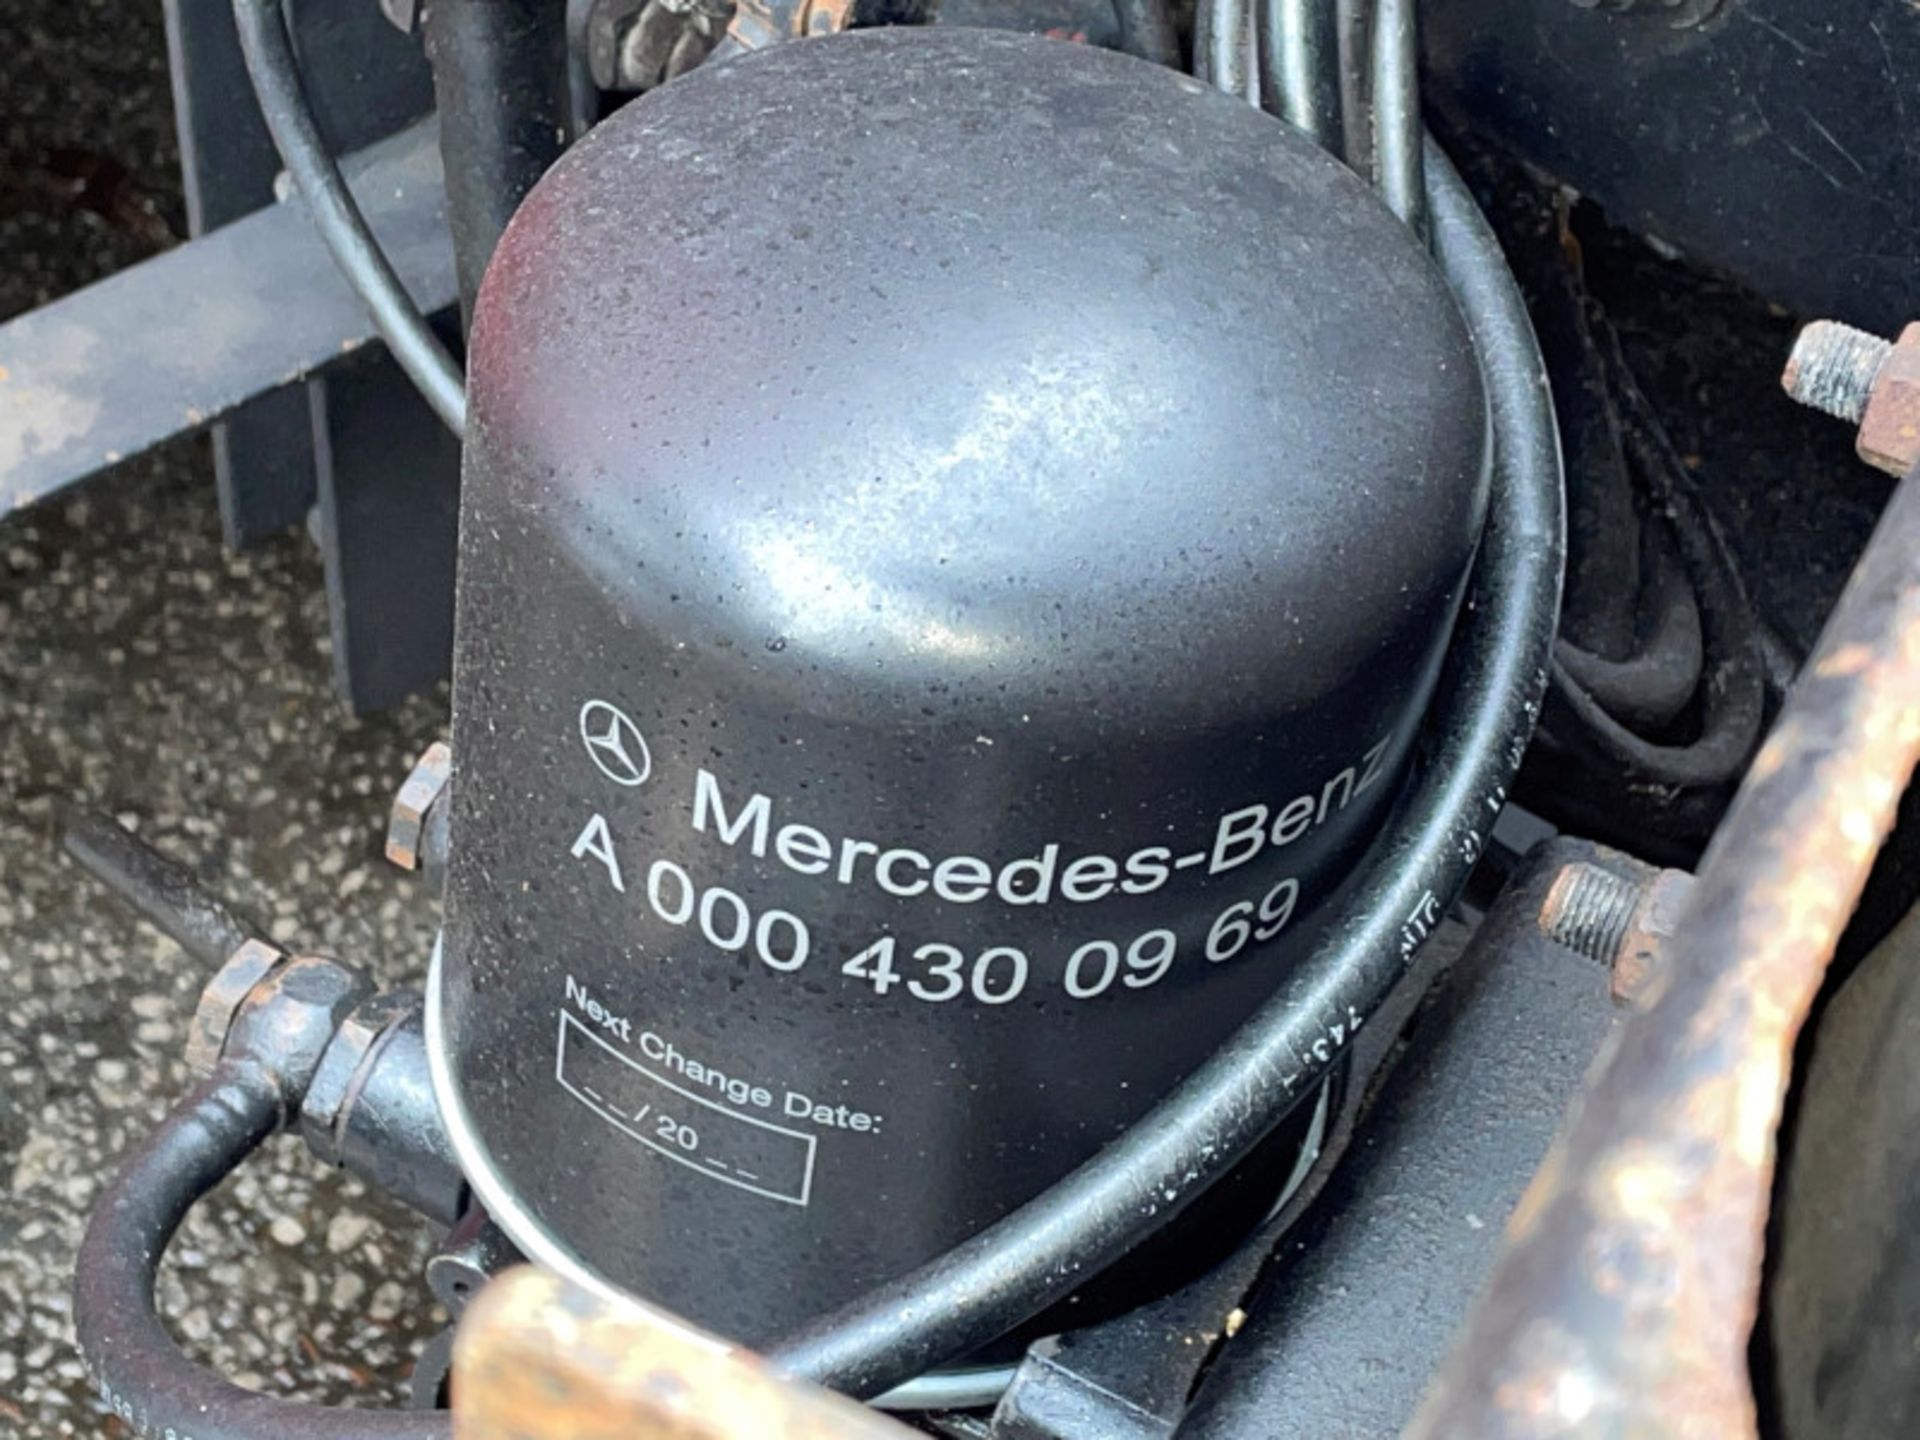 Carmichael 1120 Fire Engine - F reg - 1988 - Red - 958cc - Diesel - Mercedes-Benz Daimler-Benz Motor - Image 61 of 63